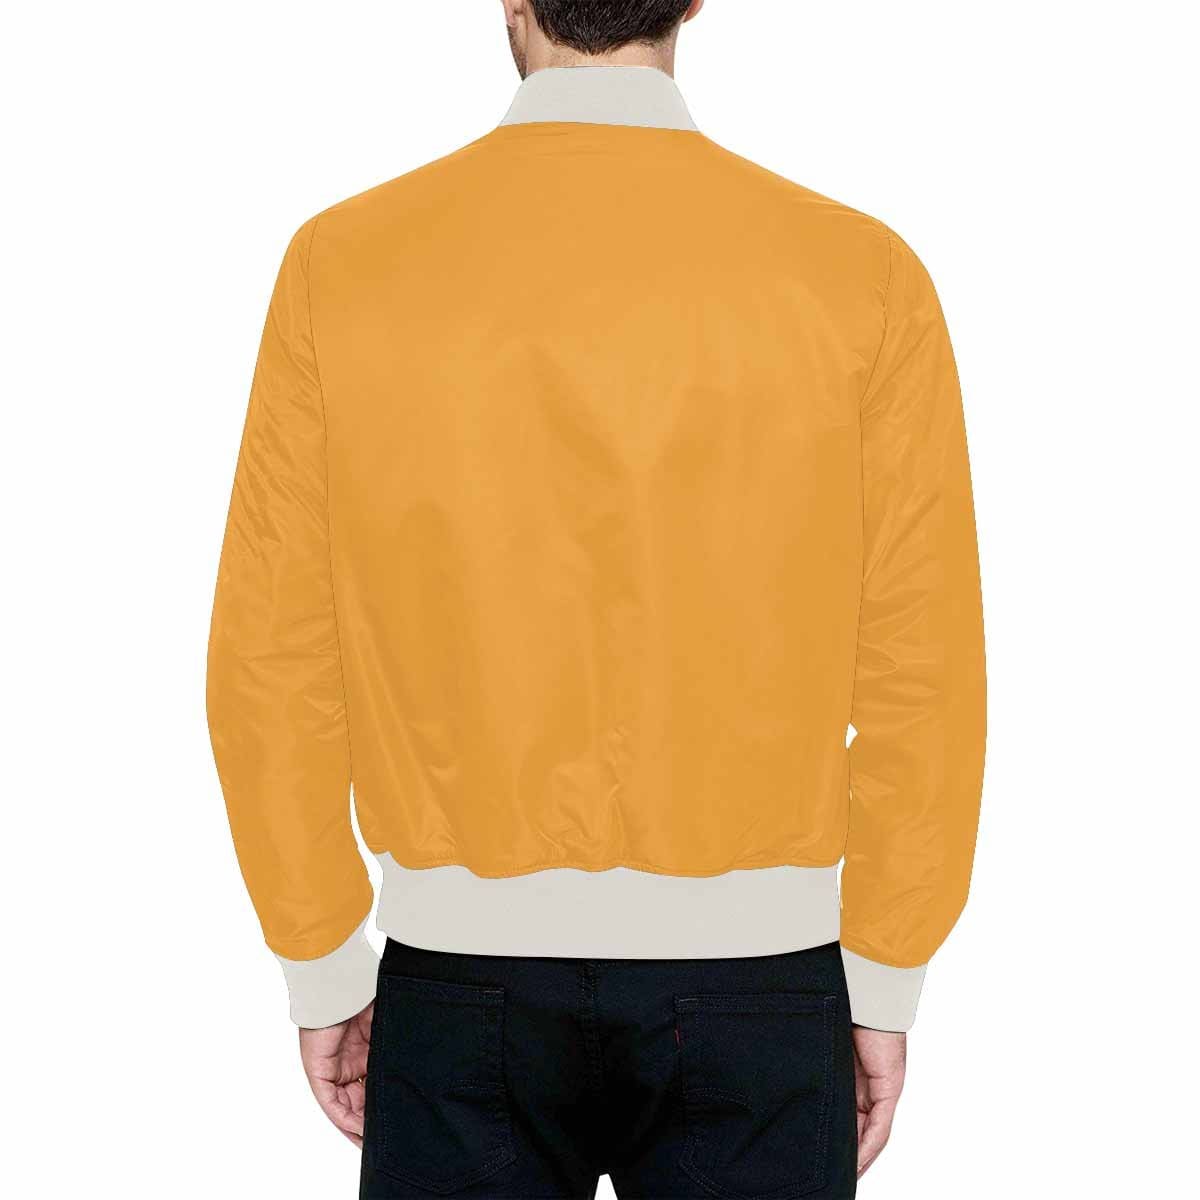 Mens Jacket Yellow Orange Bomber Jacket - Mens | Jackets | Bombers